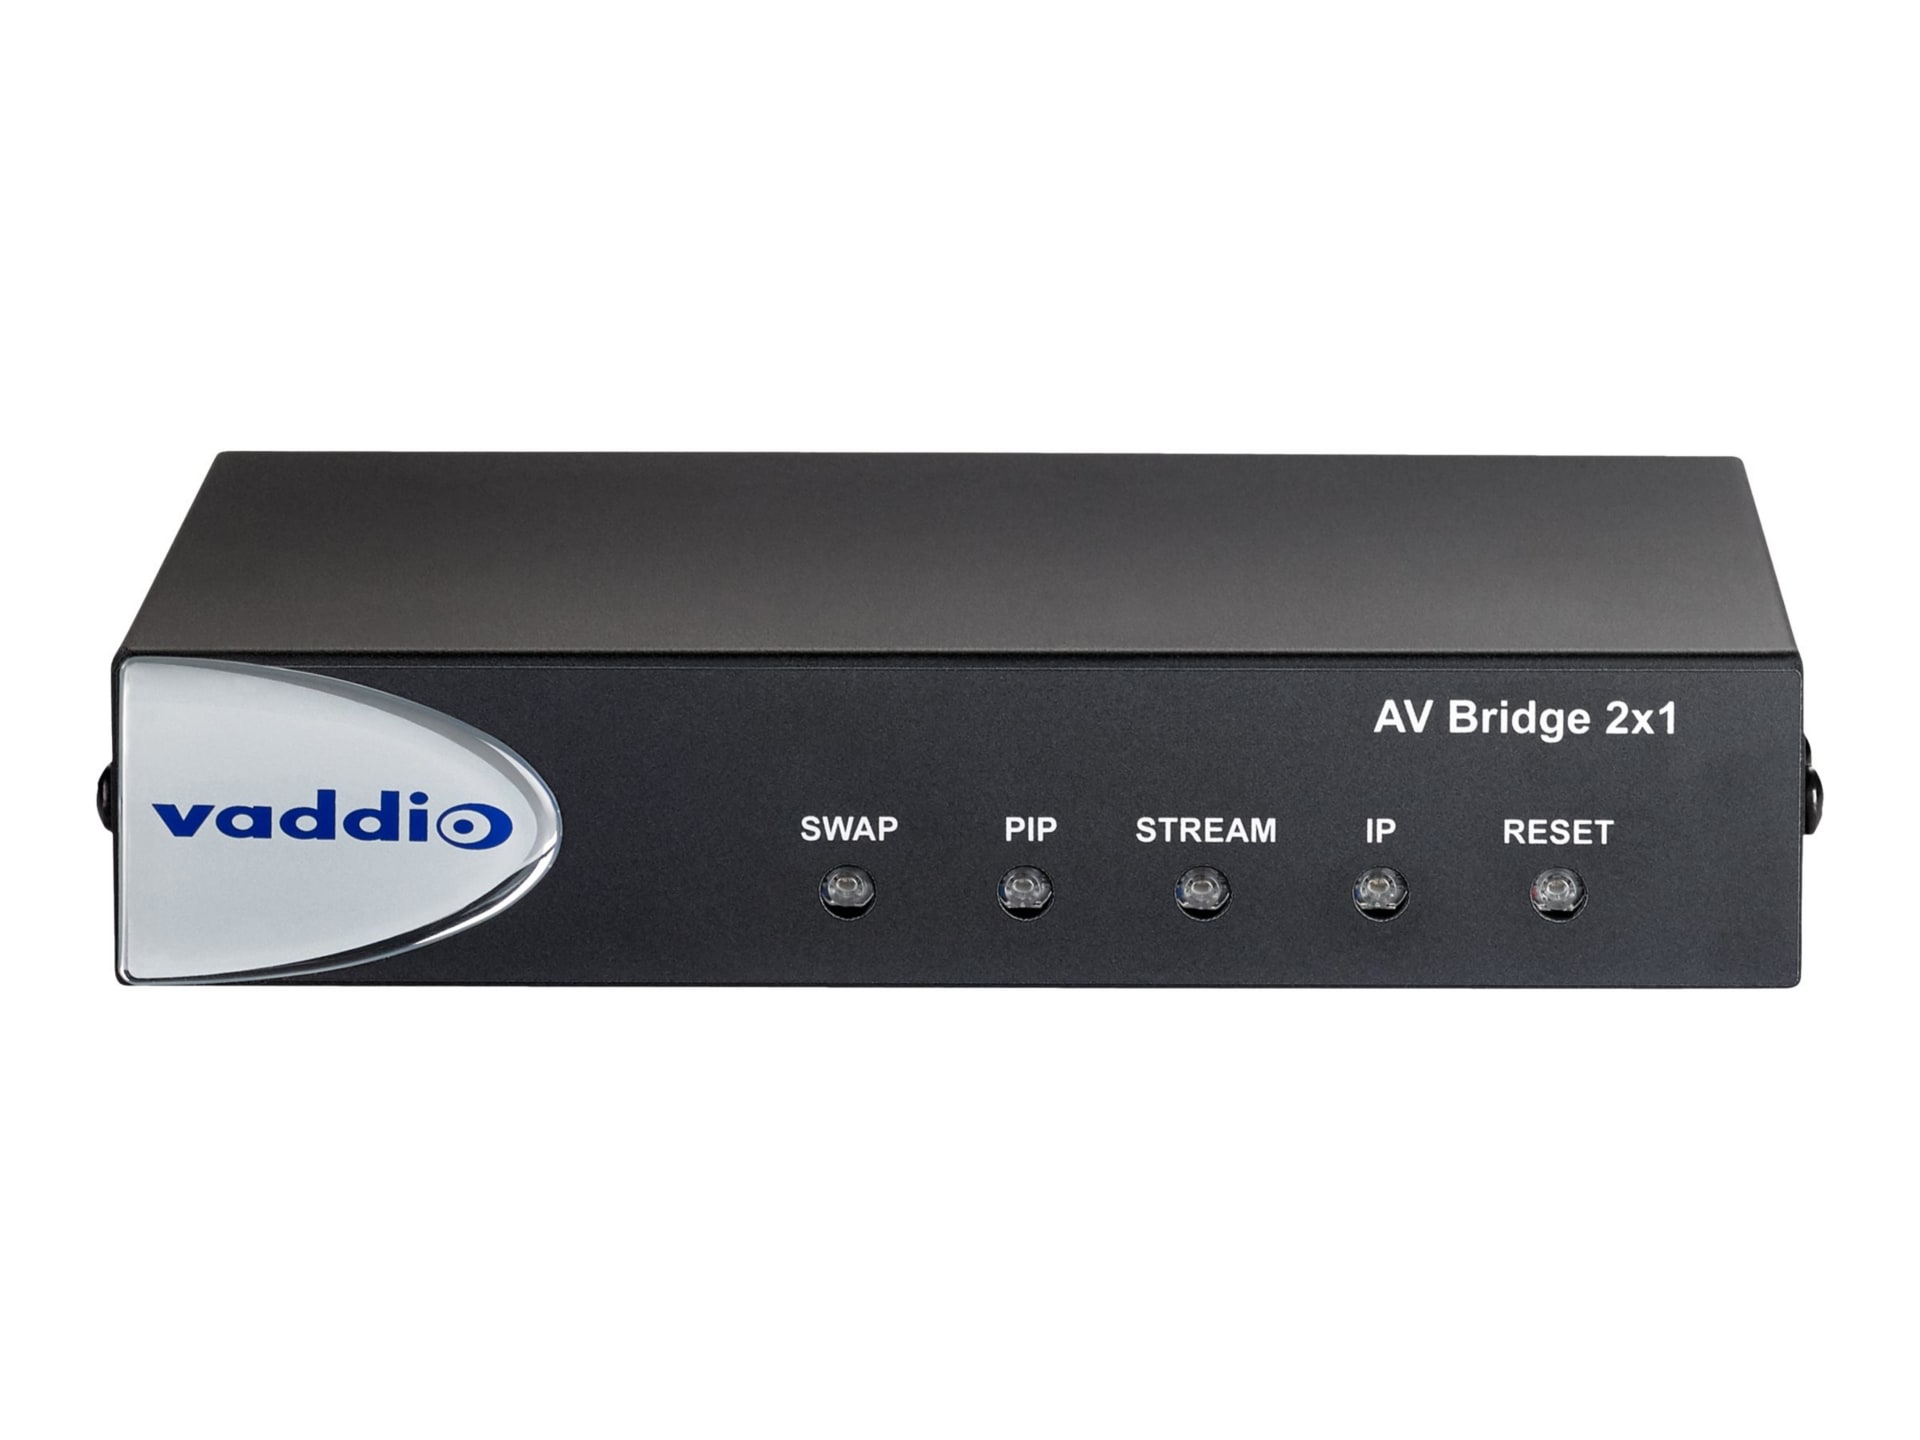 Vaddio AV Bridge 2x1 Video and Audio Mixer for Video Conferencing - Black